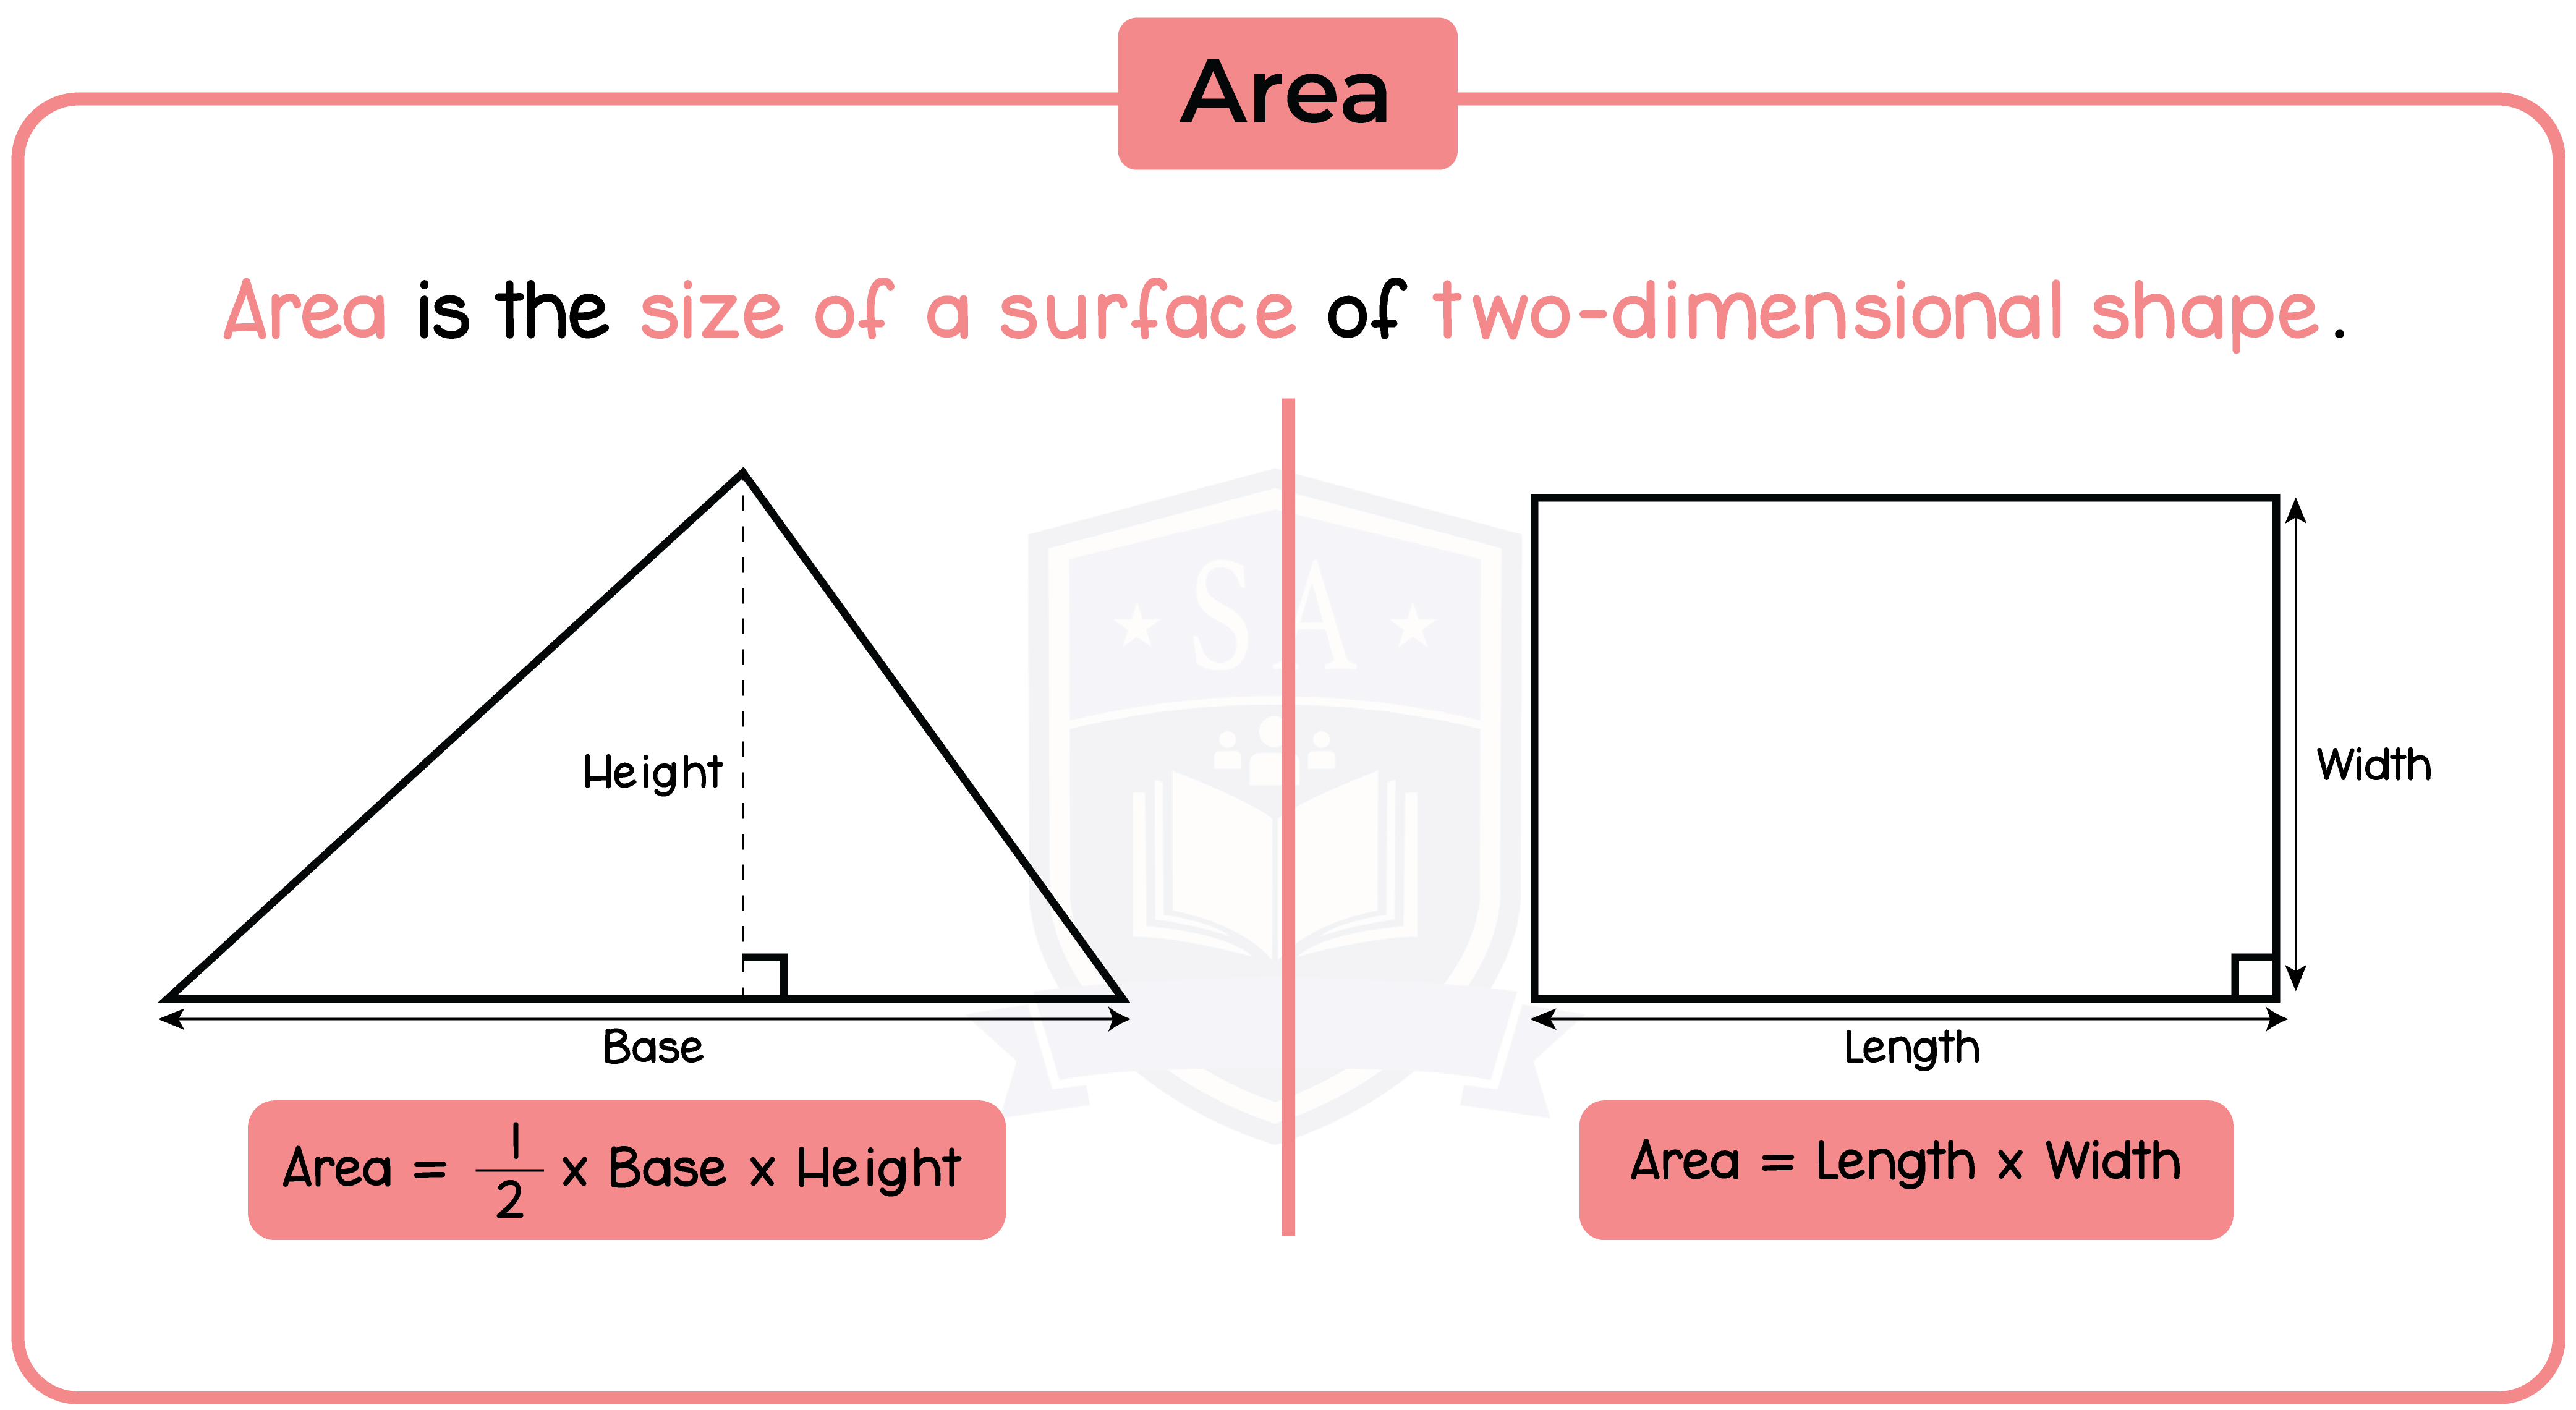 edexcel_igcse_mathematics a_topic 33_mensuration of 2D shapes_005_Area